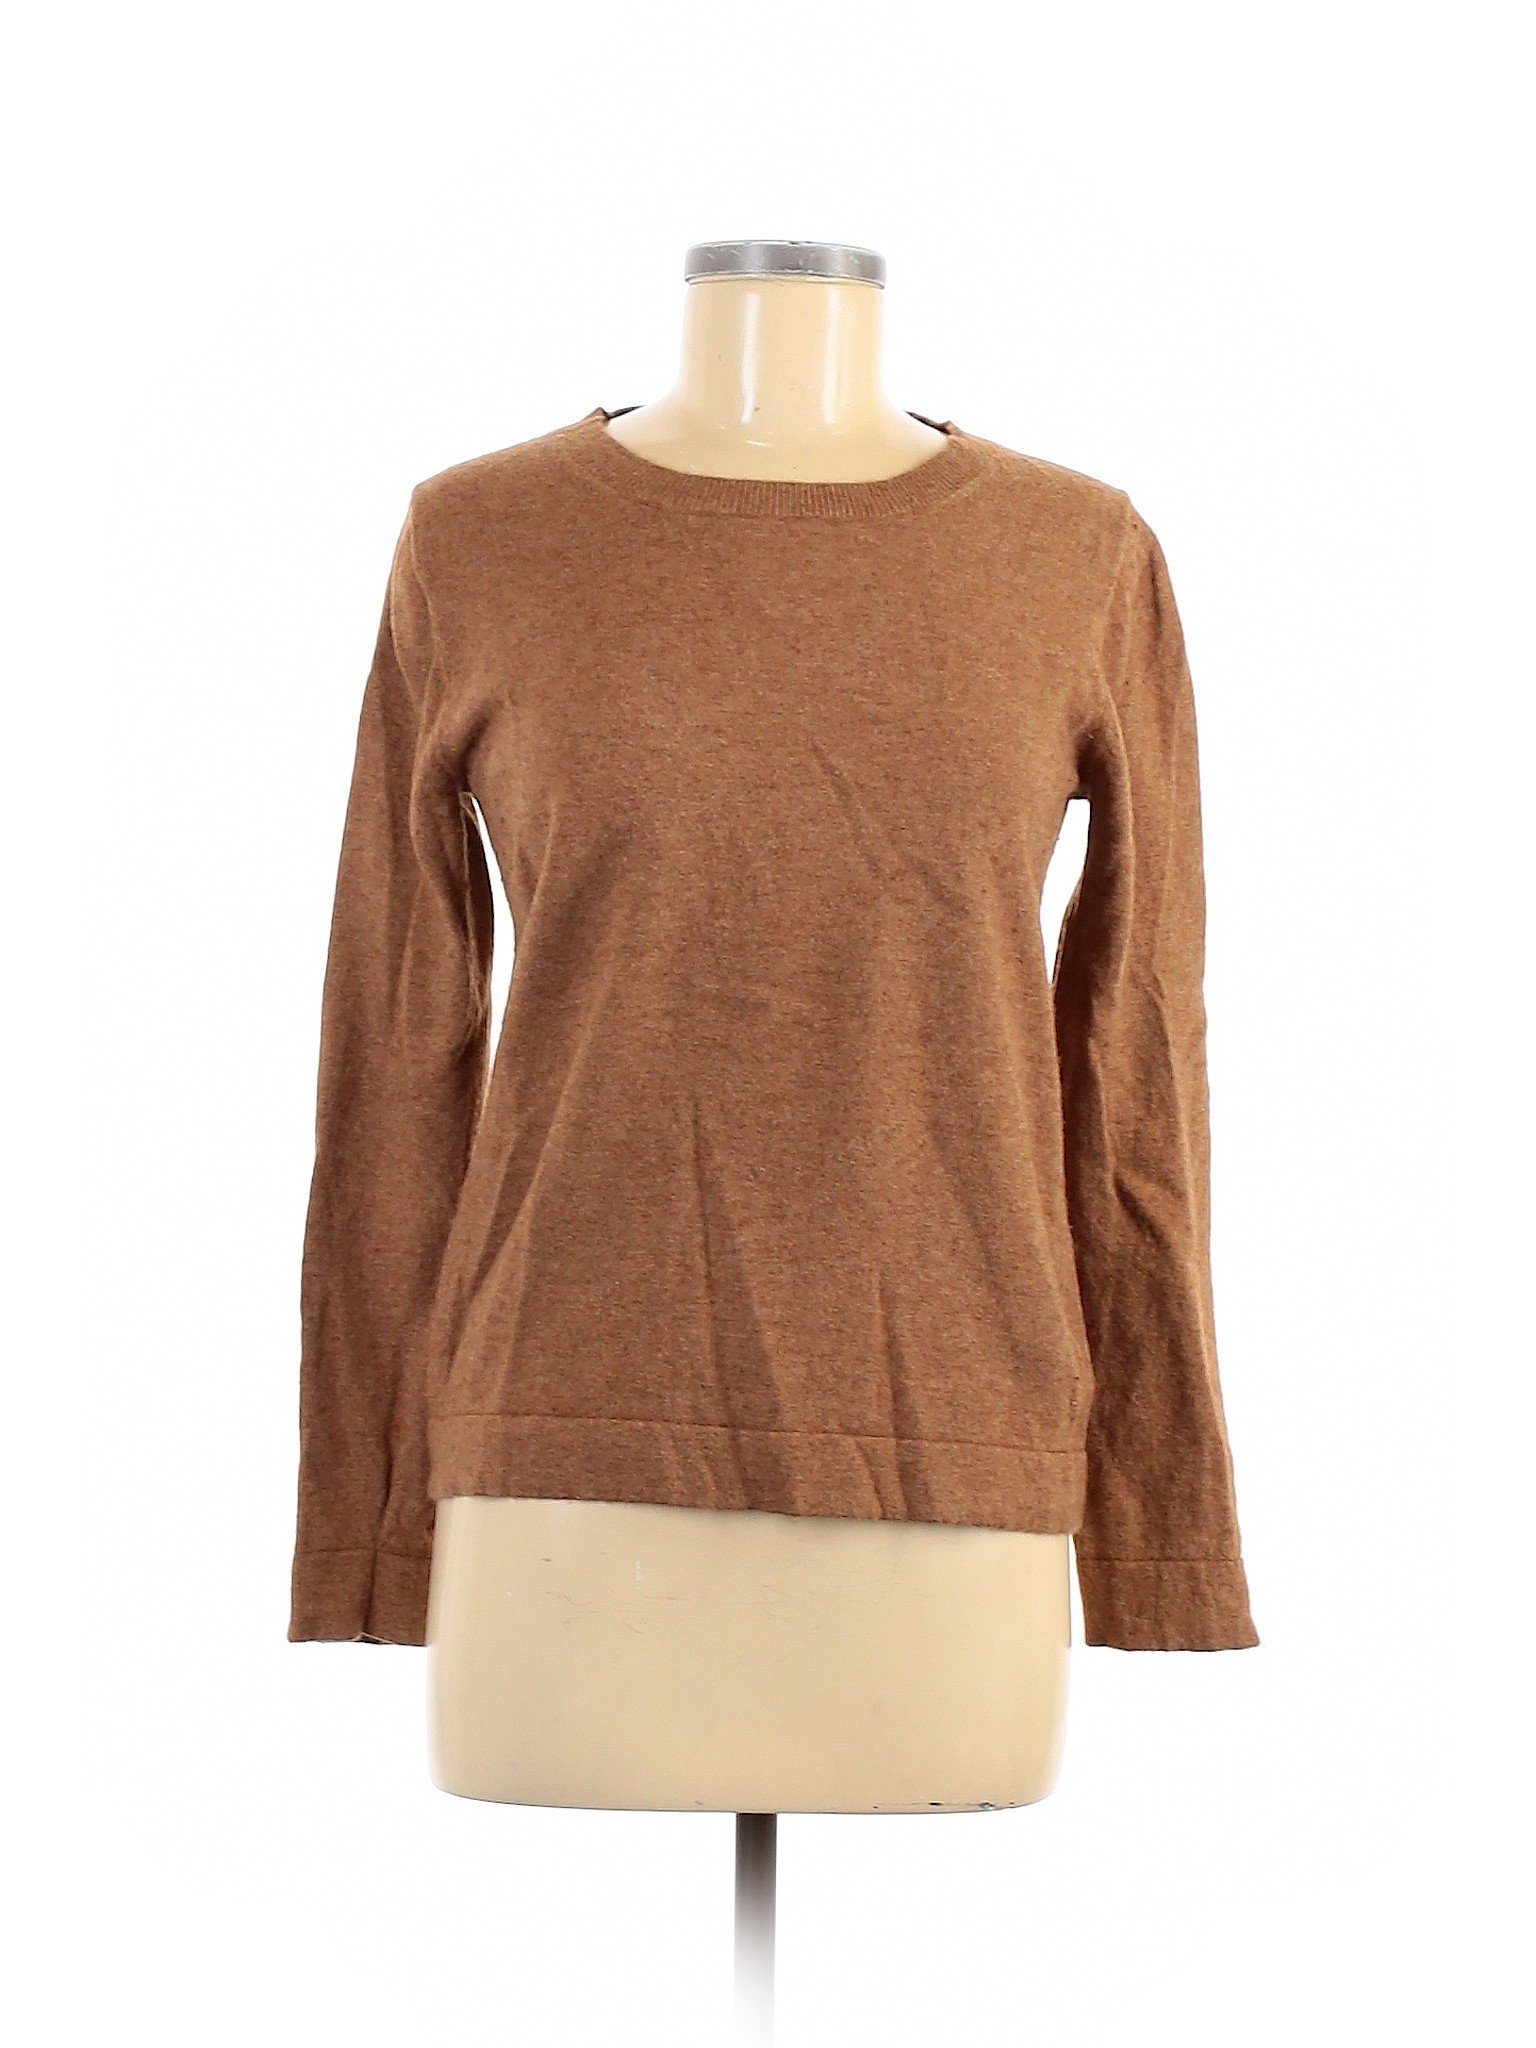 J.Crew Mercantile Women Brown Pullover Sweater M | eBay